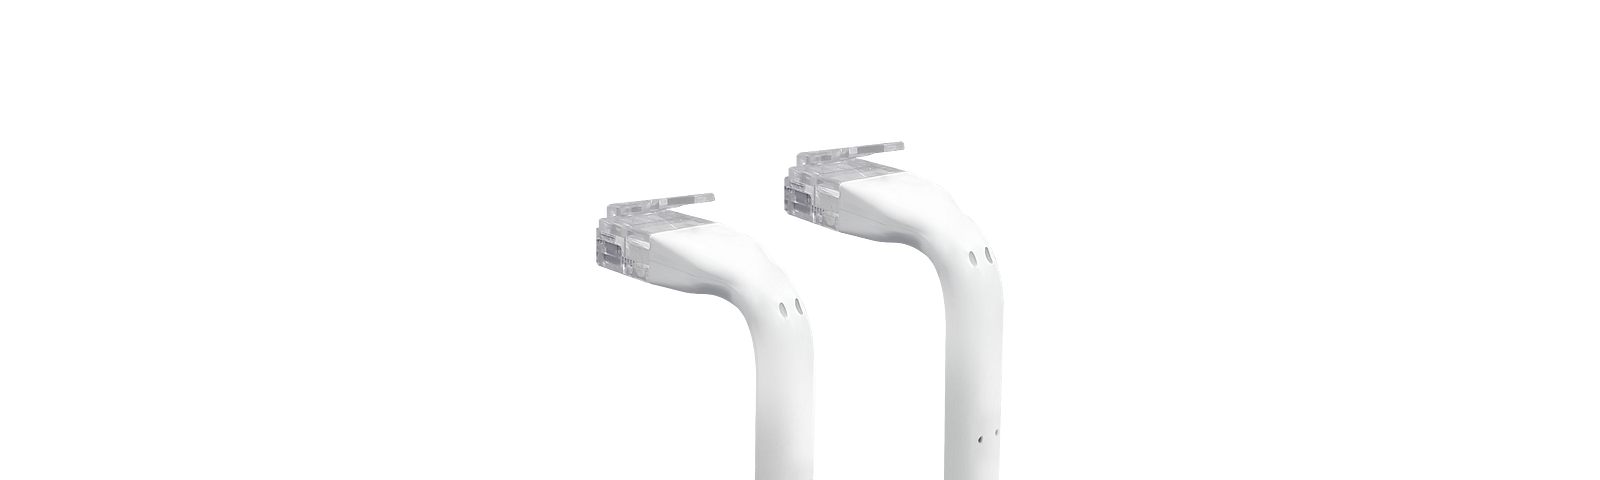 Ubiquiti 標誌性的配件類產品 Patch Cable，是一條可以在接口處任意彎折、輕薄，外觀有著 UI 一貫的簡潔色彩的網路線。